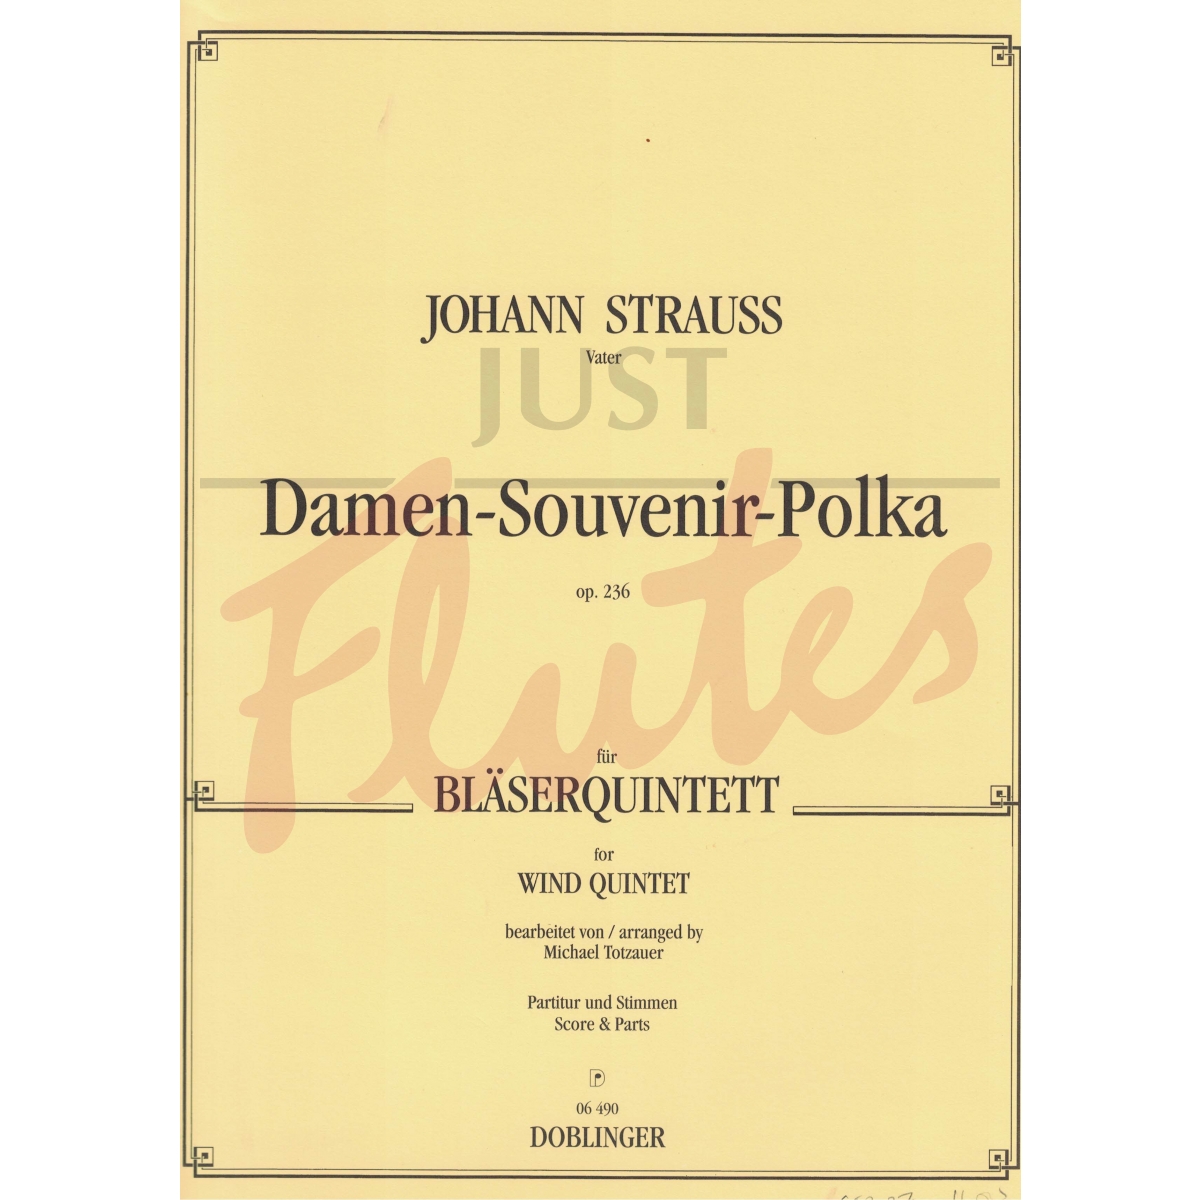 Damen-Souvenir Polka arranged for Wind Quintet